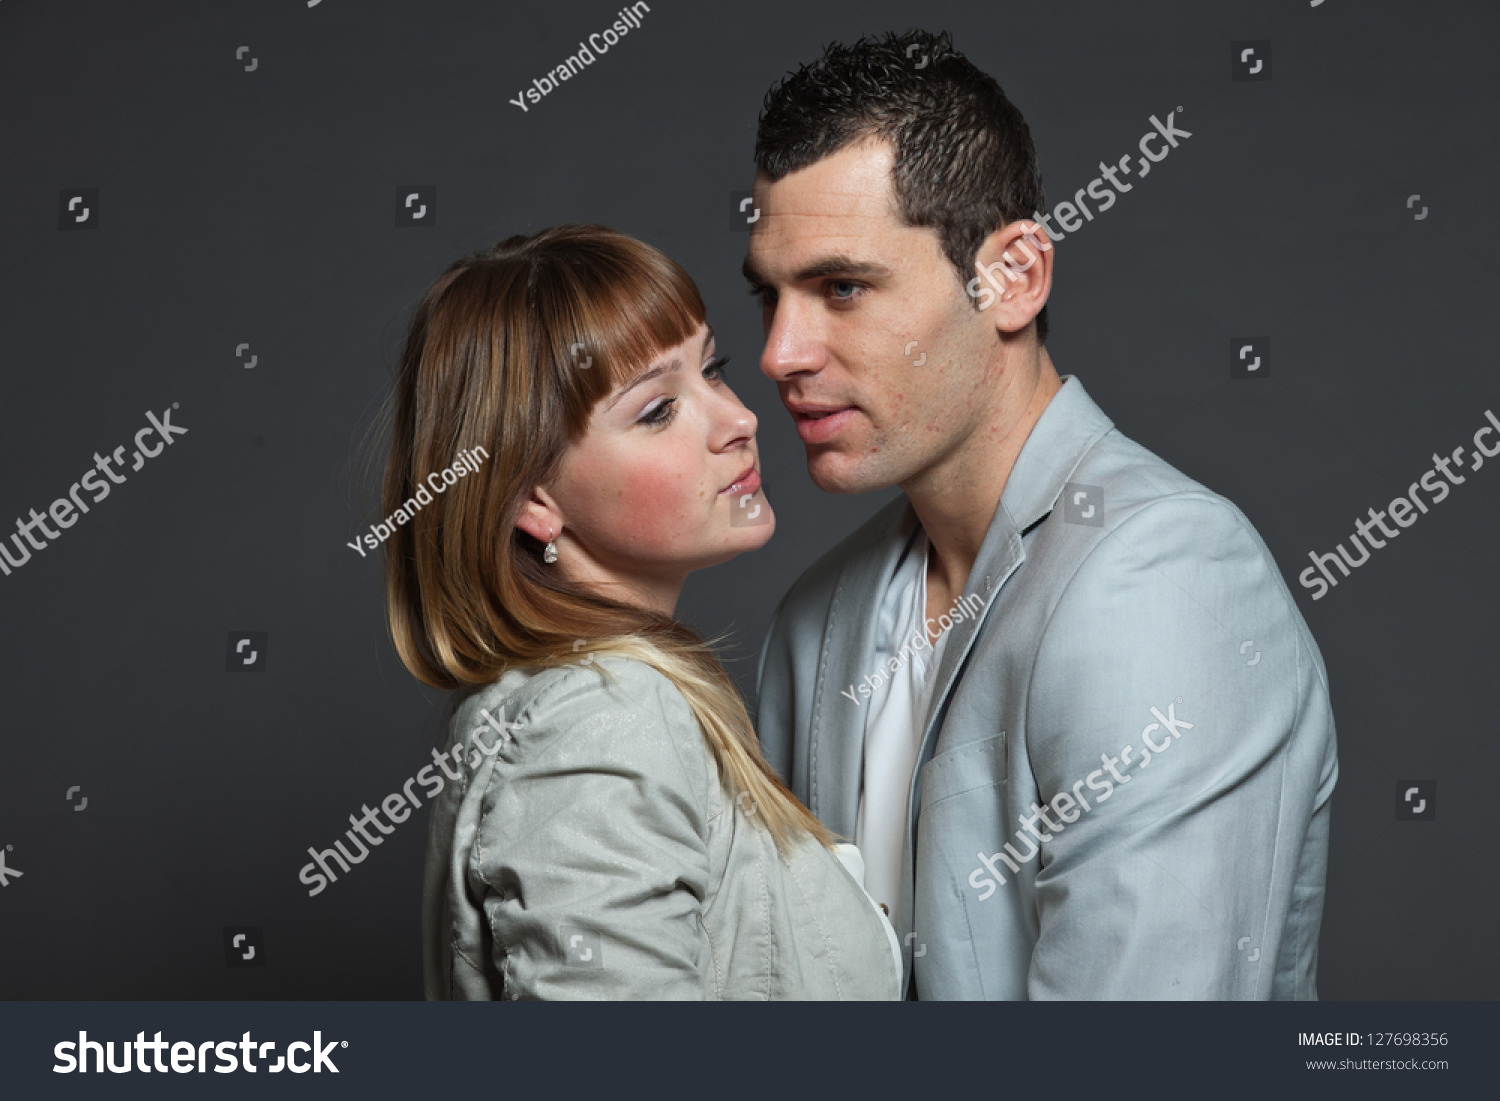 https://image.shutterstock.com/z/stock-photo-young-couple-man-and-woman-in-love-studio-shot-127698356.jpg